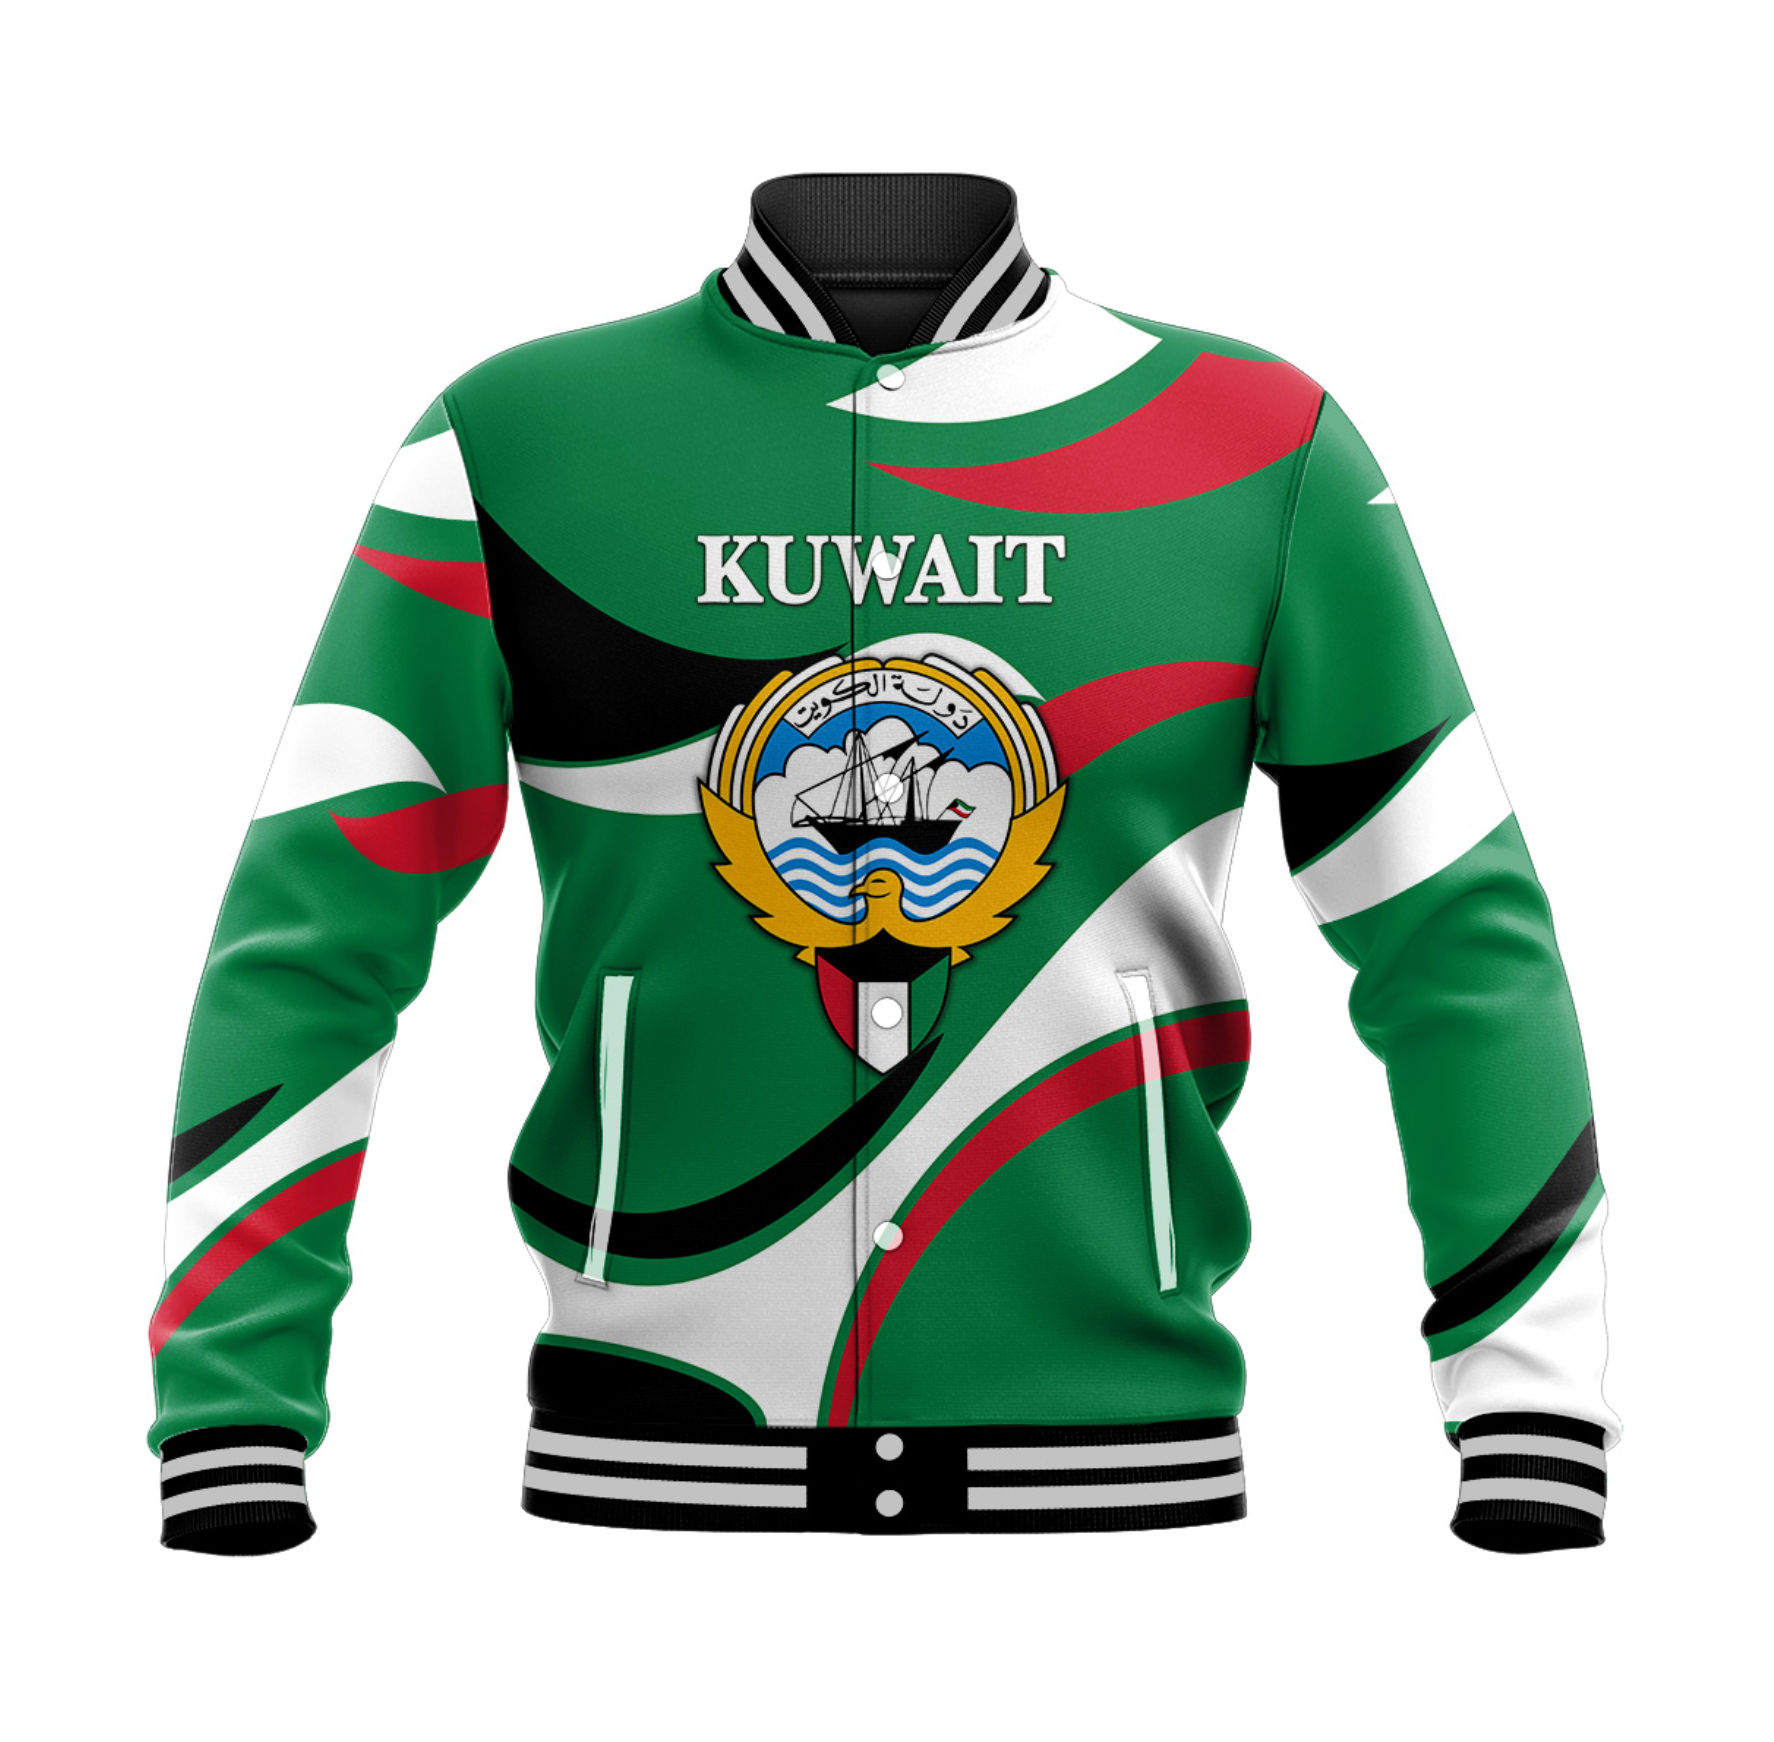 kuwait-baseball-jacket-sporty-style-green